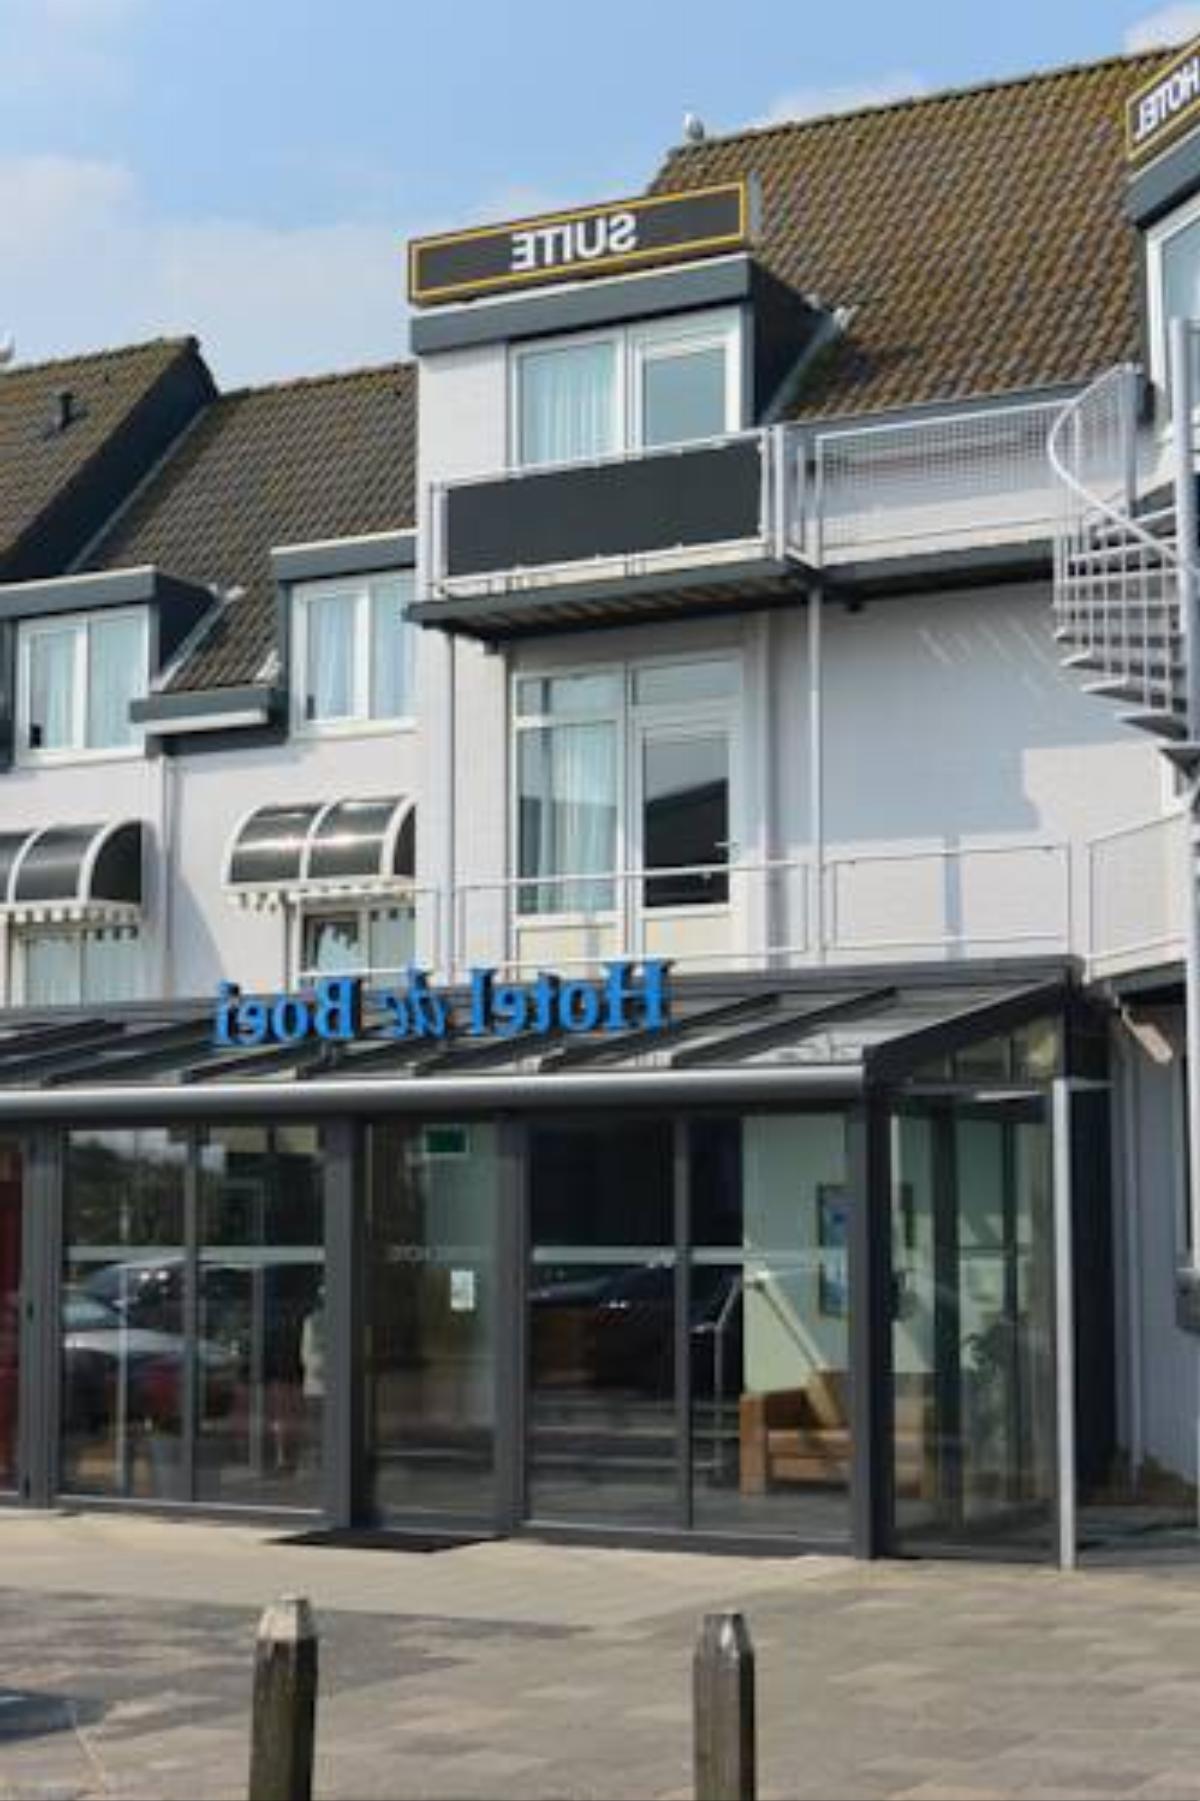 Hotel De Boei Hotel Egmond aan Zee Netherlands